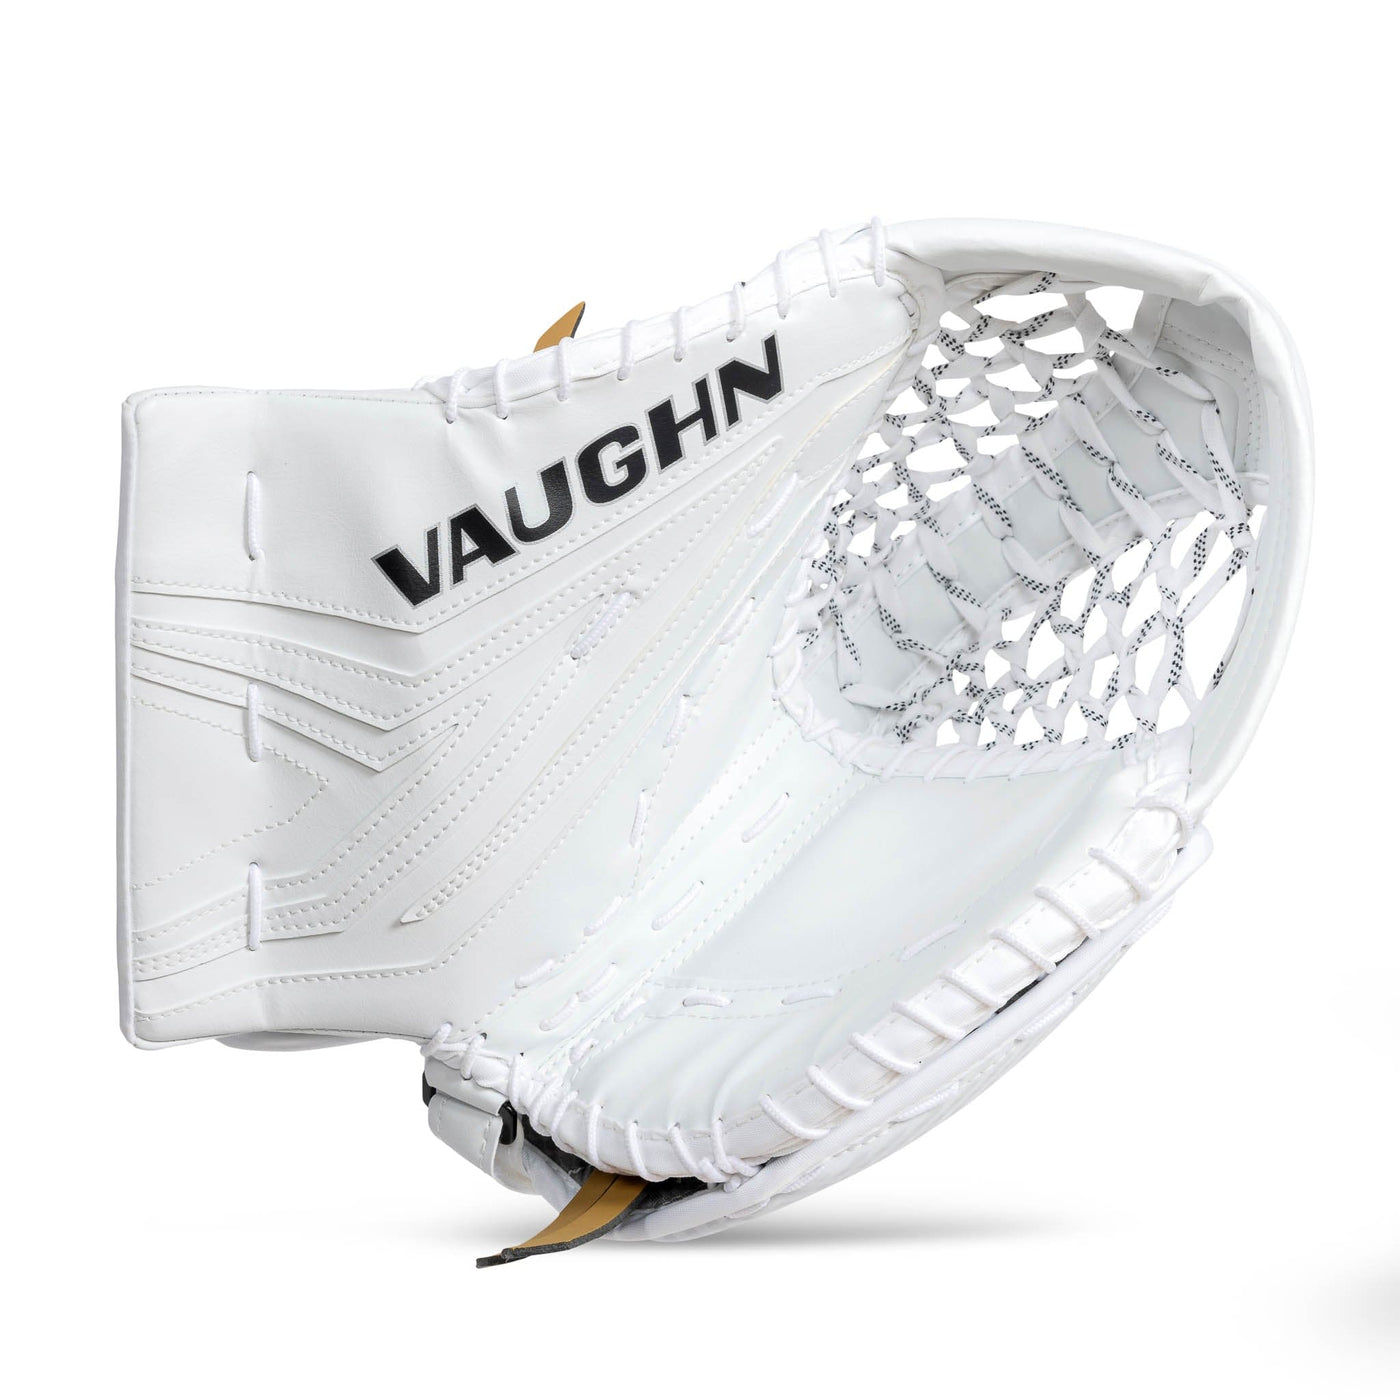 Vaughn Ventus SLR3 Junior Goalie Catcher - The Hockey Shop Source For Sports